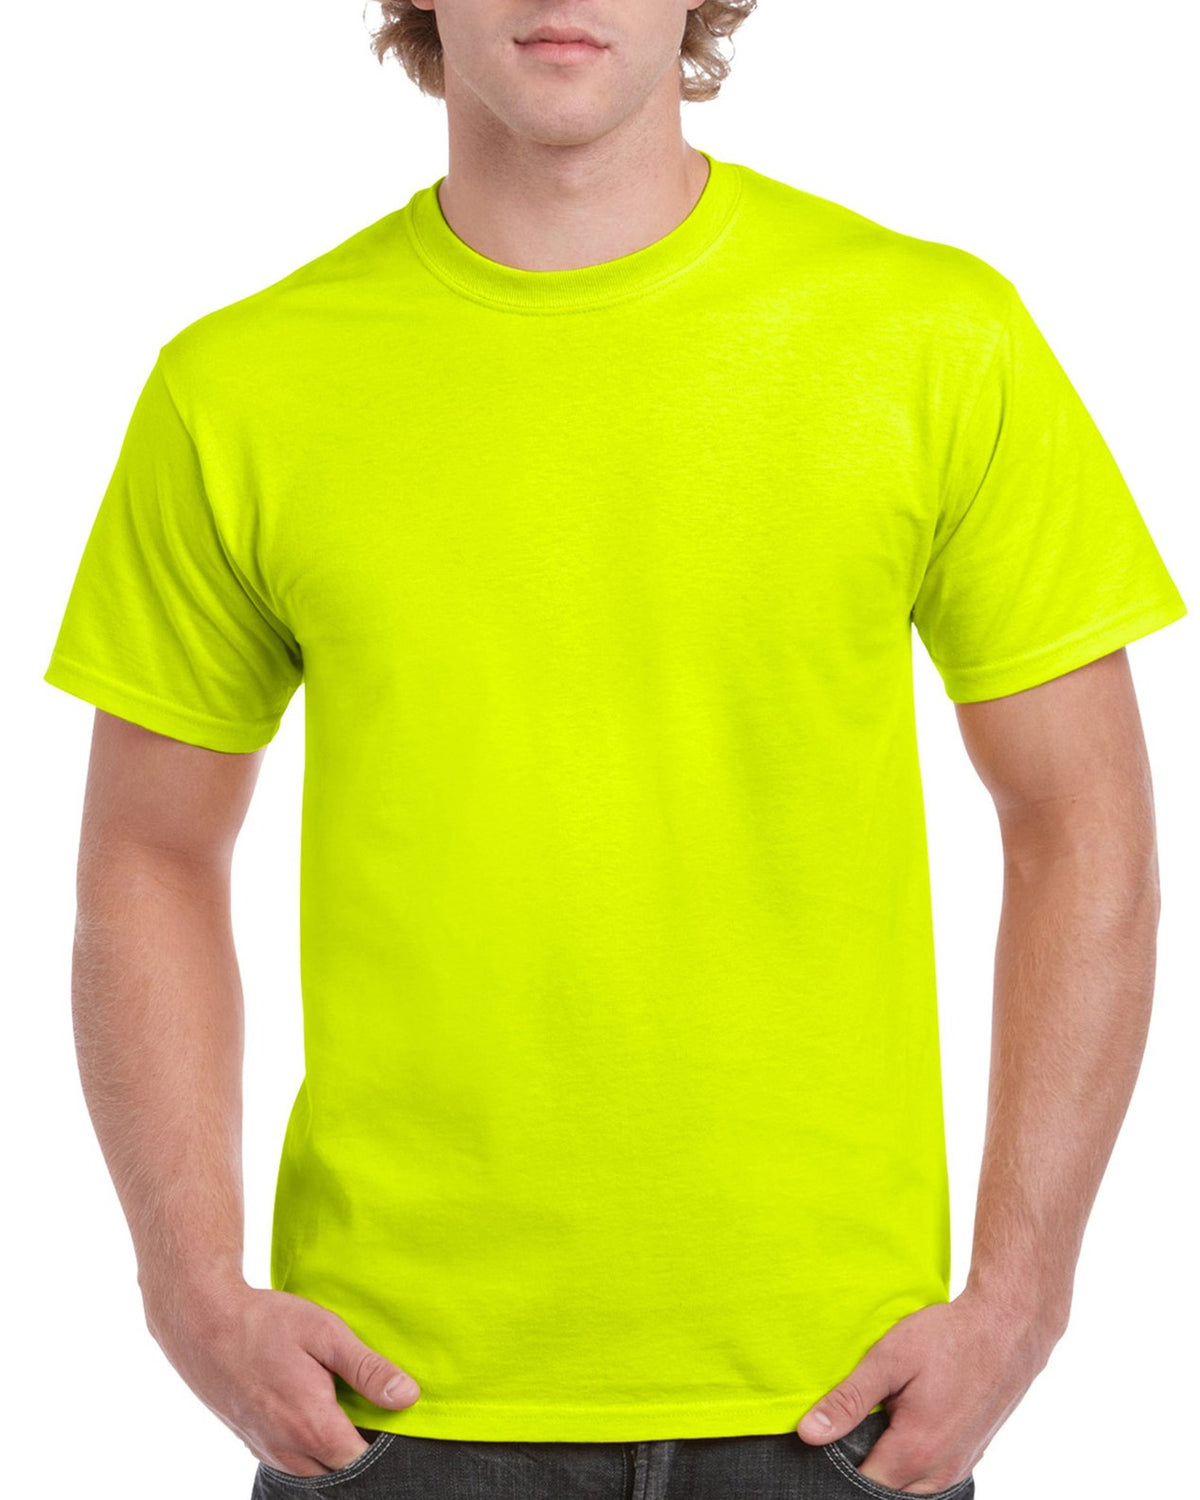 Youth T-shirt Gildan 5000B Heavy Cotton™ Unisex for Heat Transfer